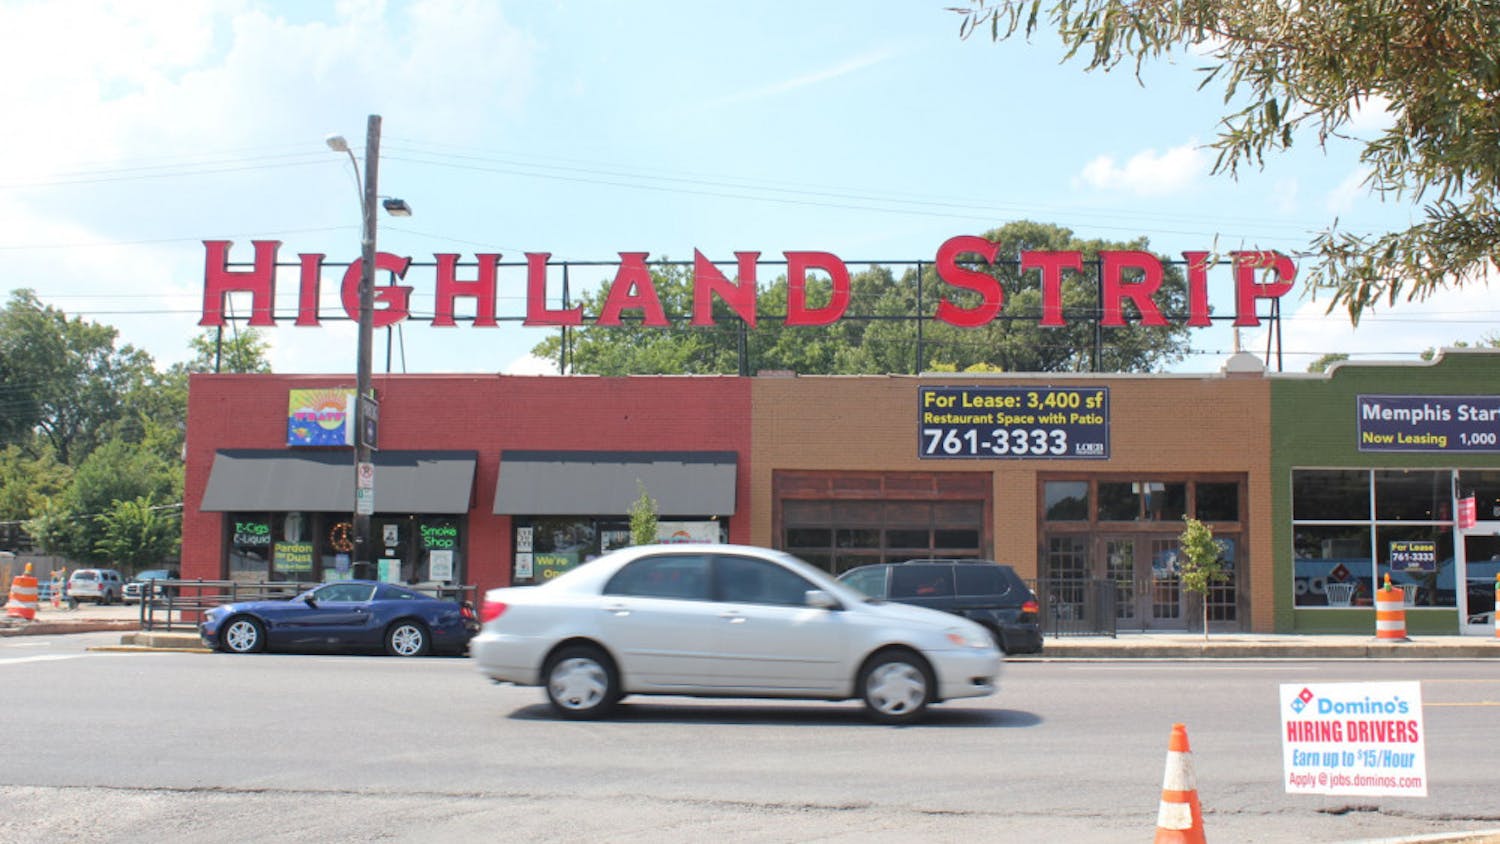 Highland Strip will open soon attracting university neighborhood